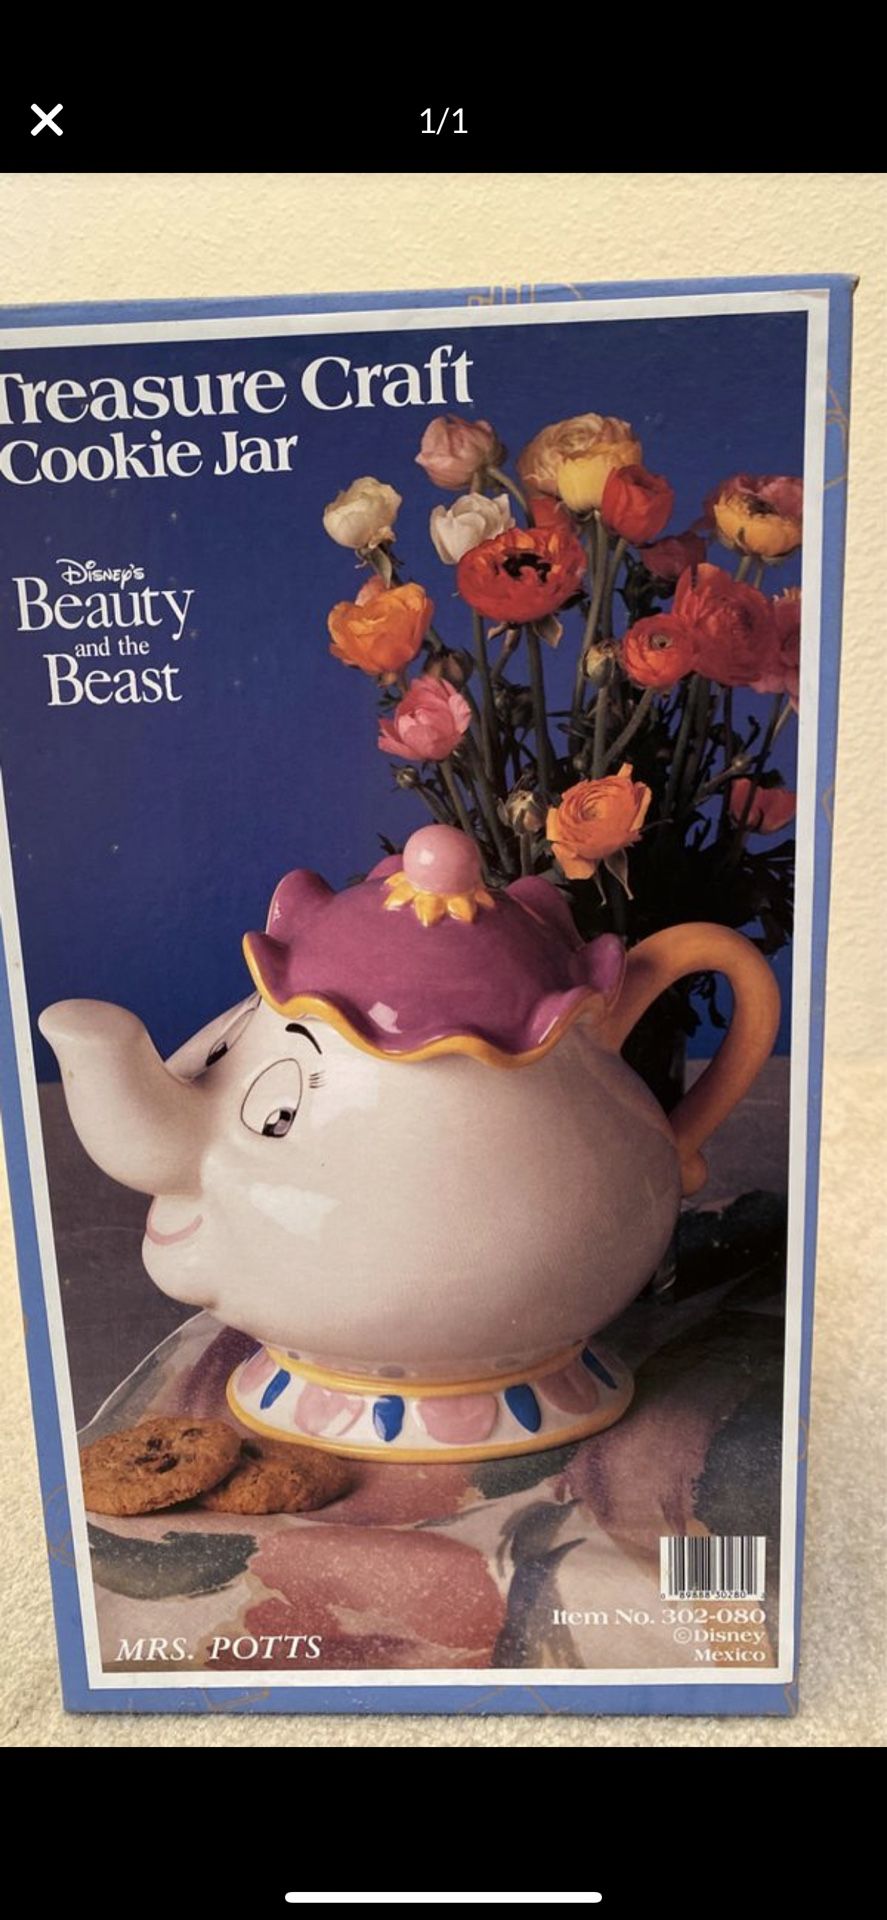 Brand New Original Disney Store Mrs. Potts Beauty and the Beast Treasure Craft Cookies Jar